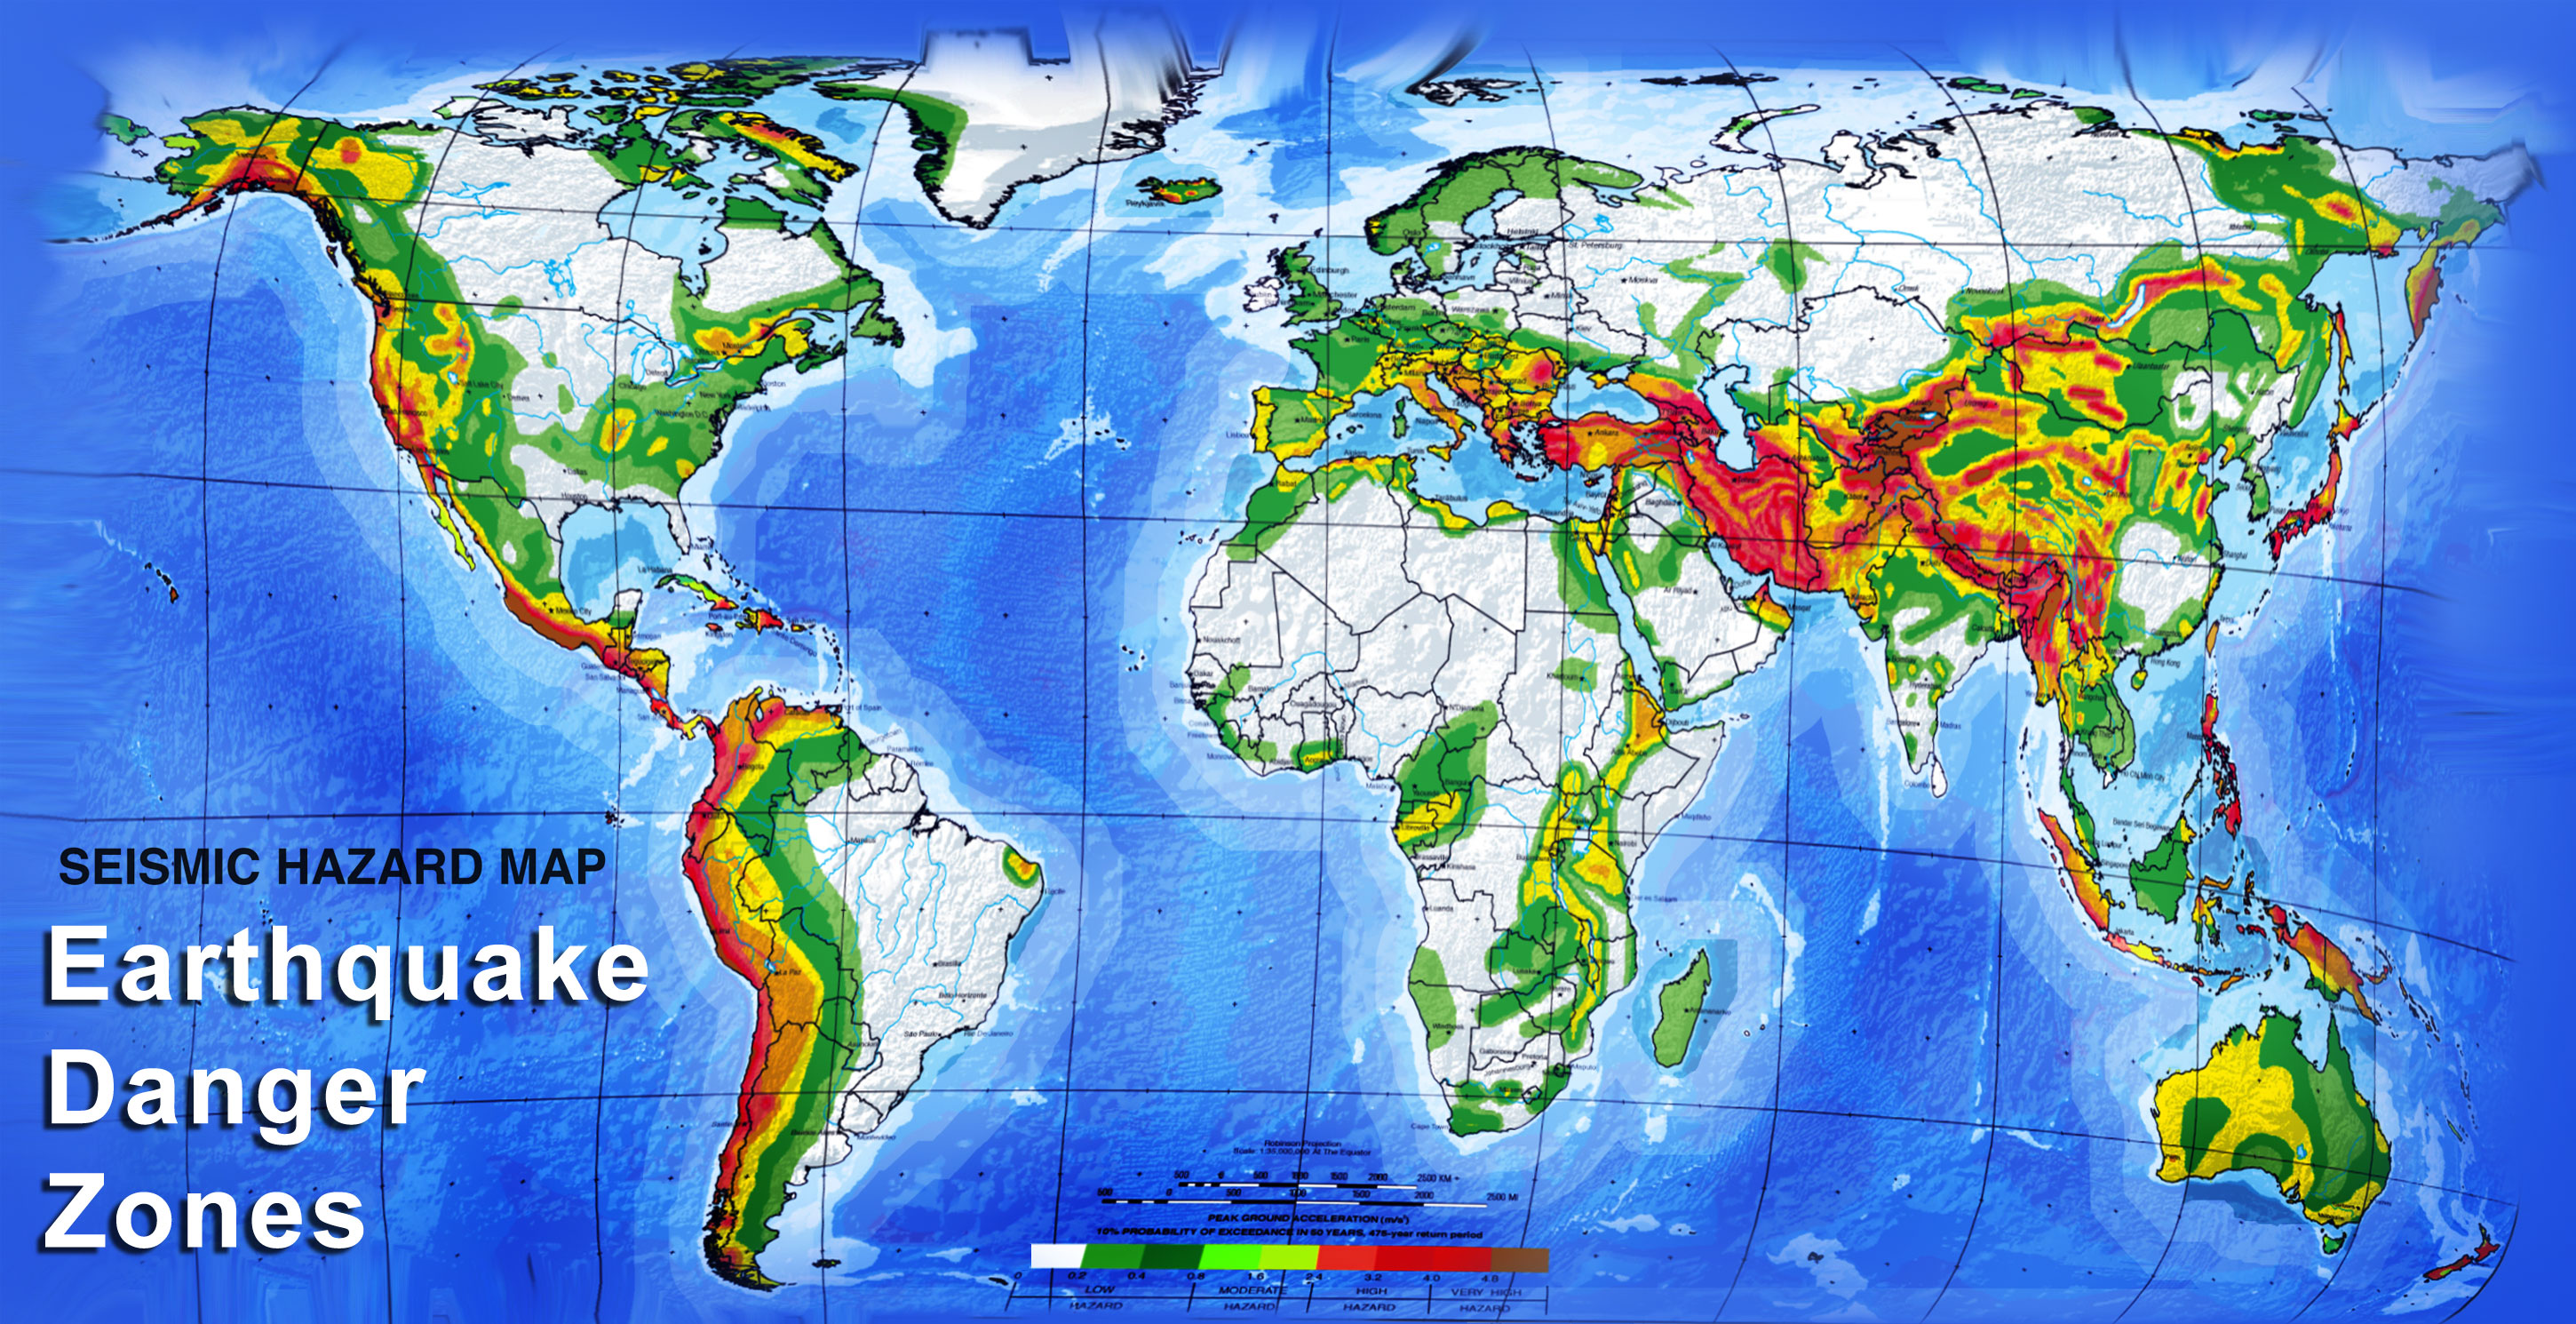 Earthquake danger zone, seismic hazard zones world map large size hd image